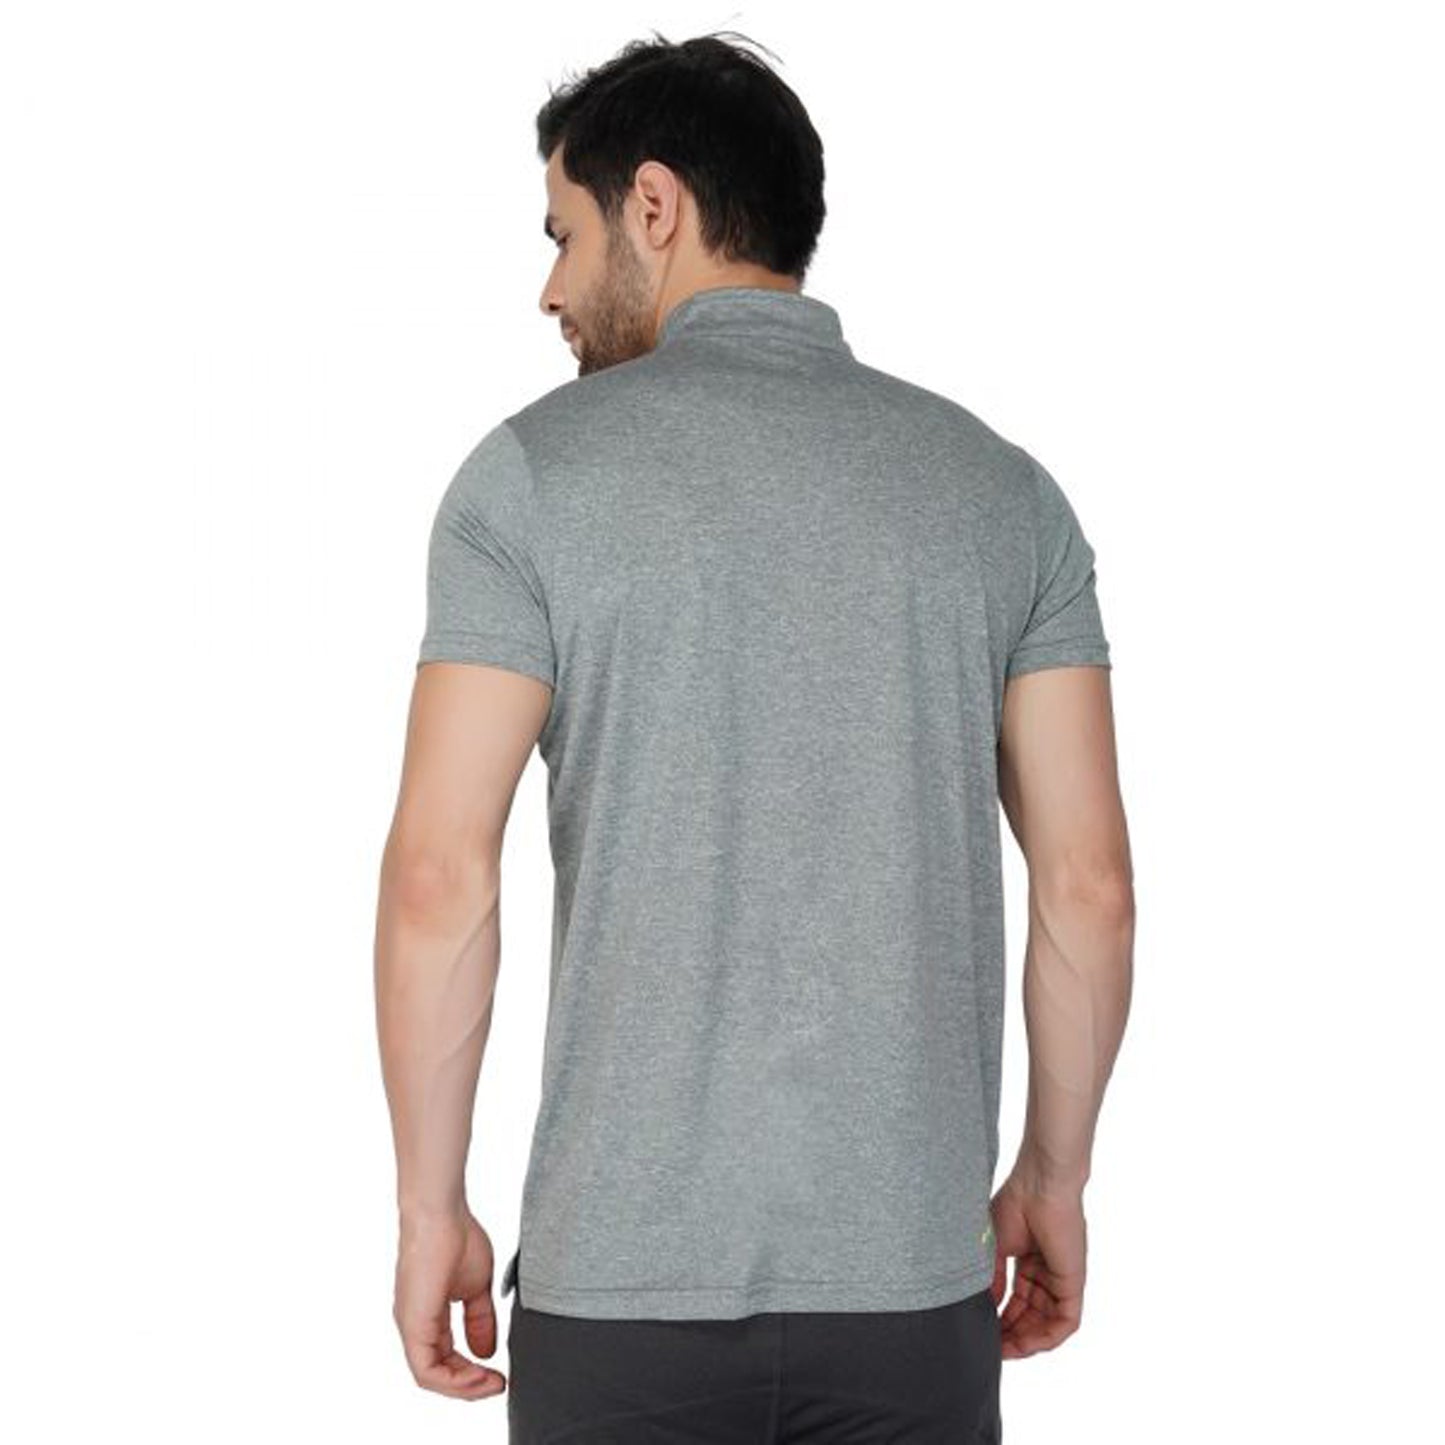 Vector X VTD-055 Men's T-Shirt, Grey - Best Price online Prokicksports.com